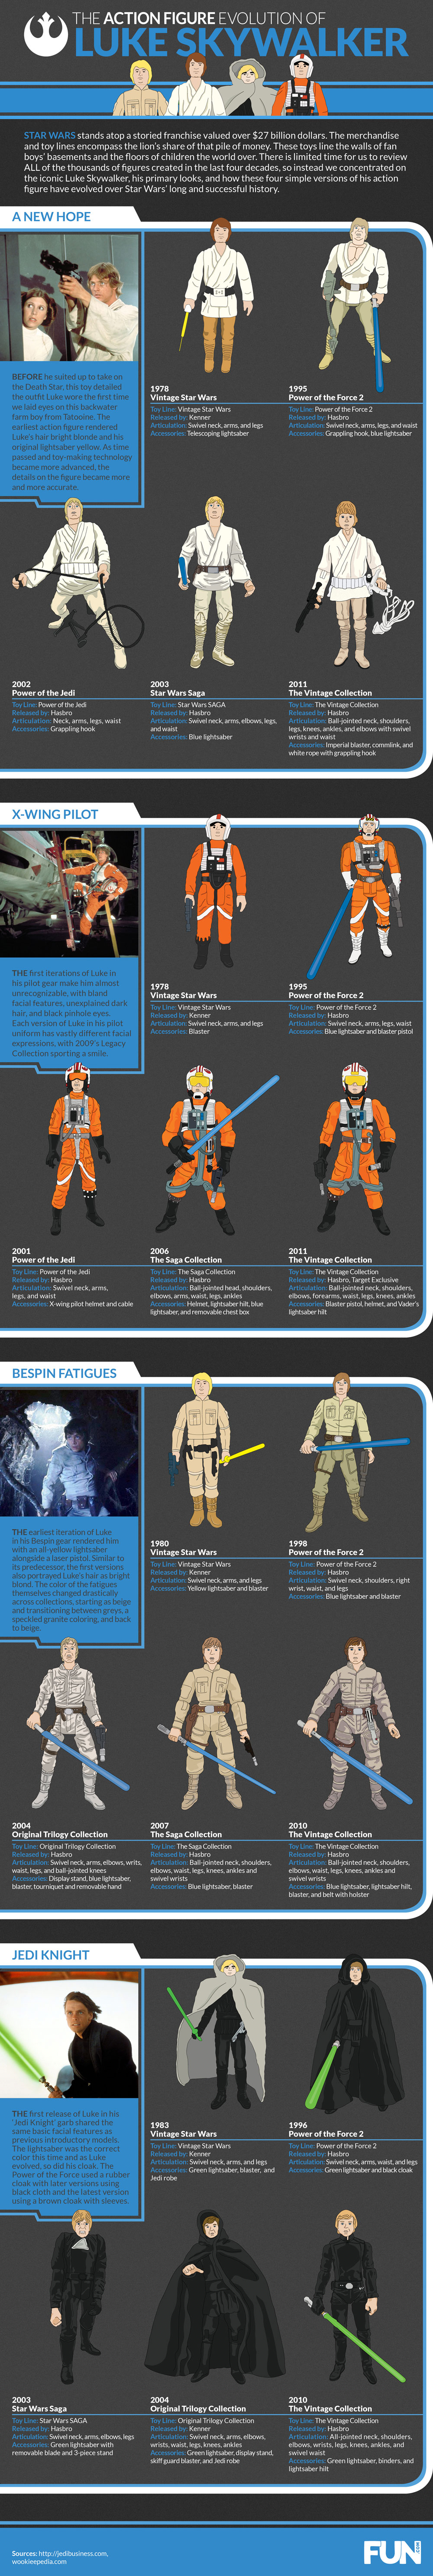  Star Wars Luke Skywalker Action Figure Infographic